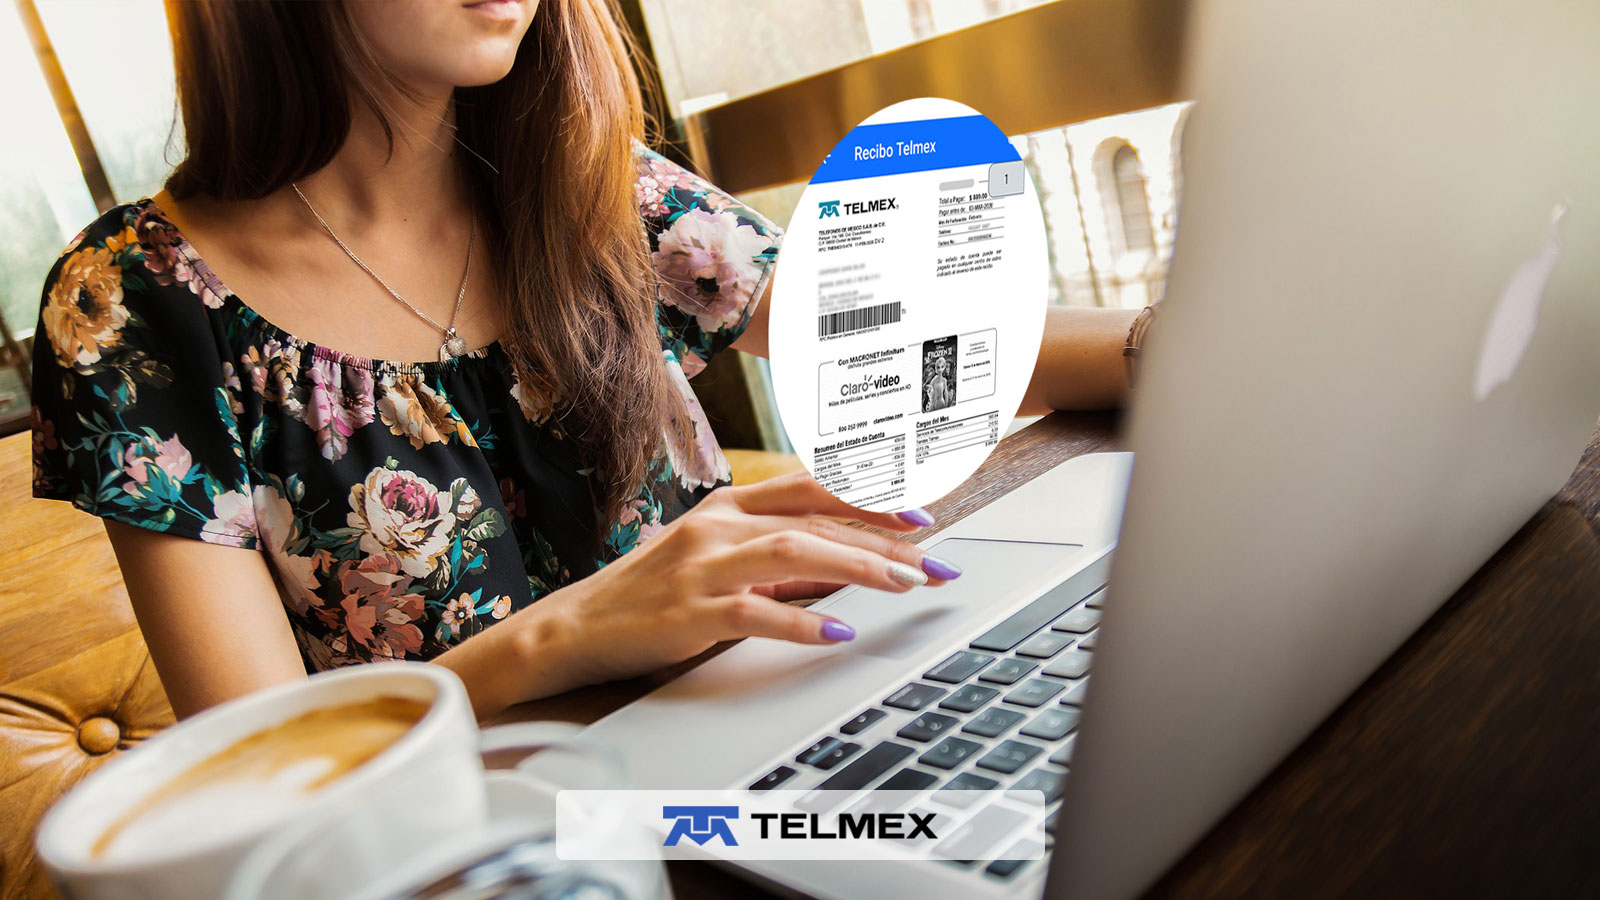 Recibo Telmex